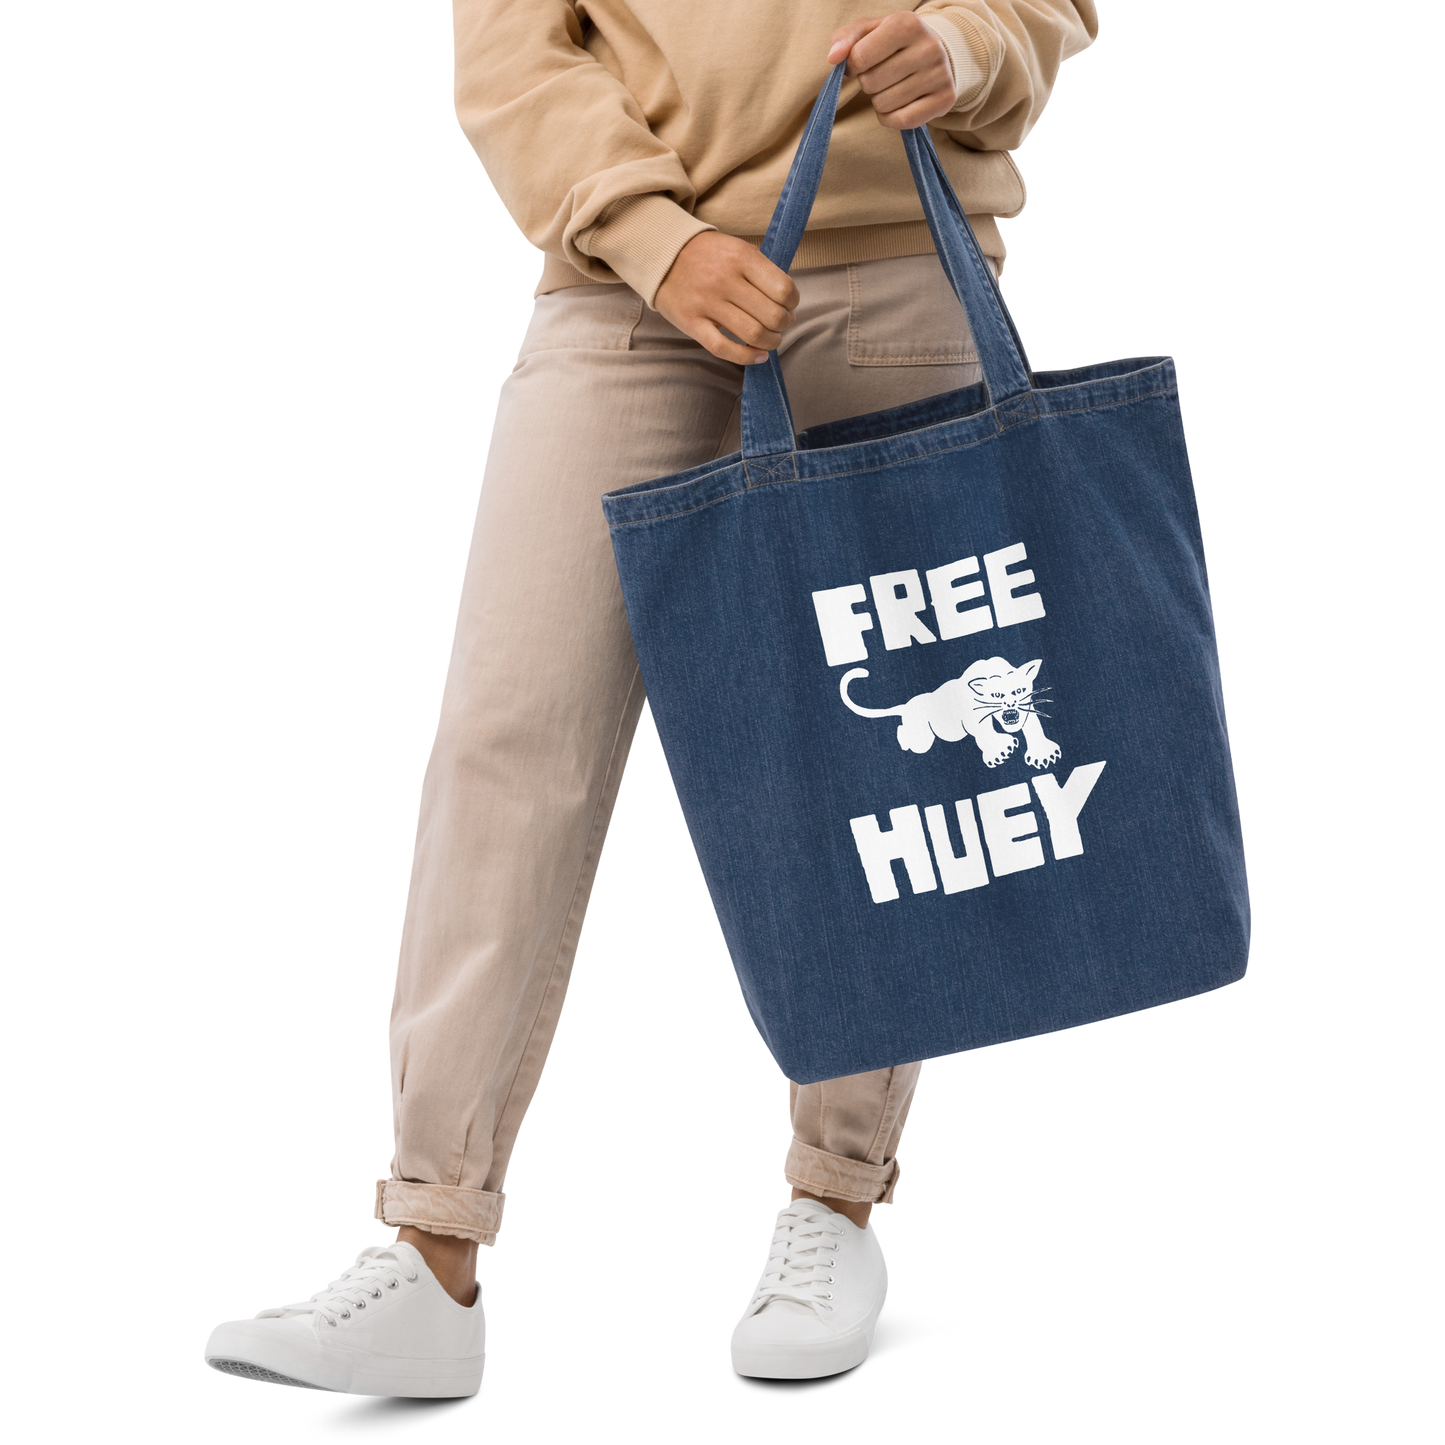 Free Huey Organic Denim Tote Bag